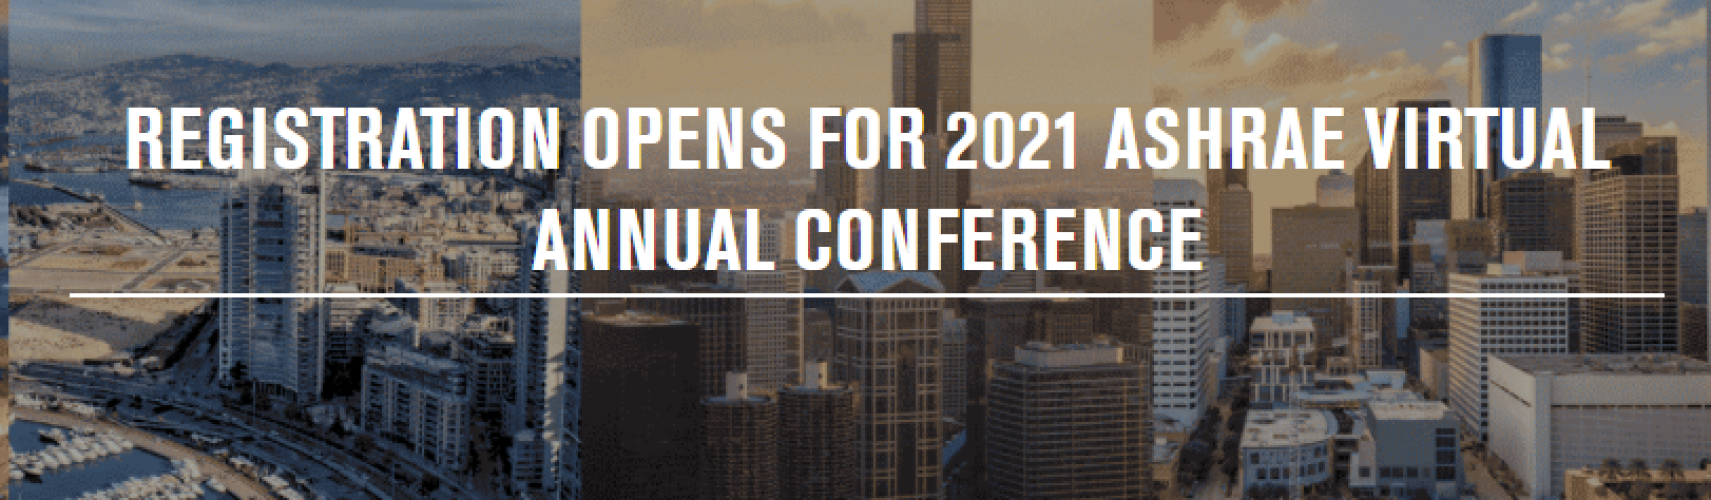 se-abre-la-inscripcin-para-la-conferencia-anual-virtual-ashrae-2021